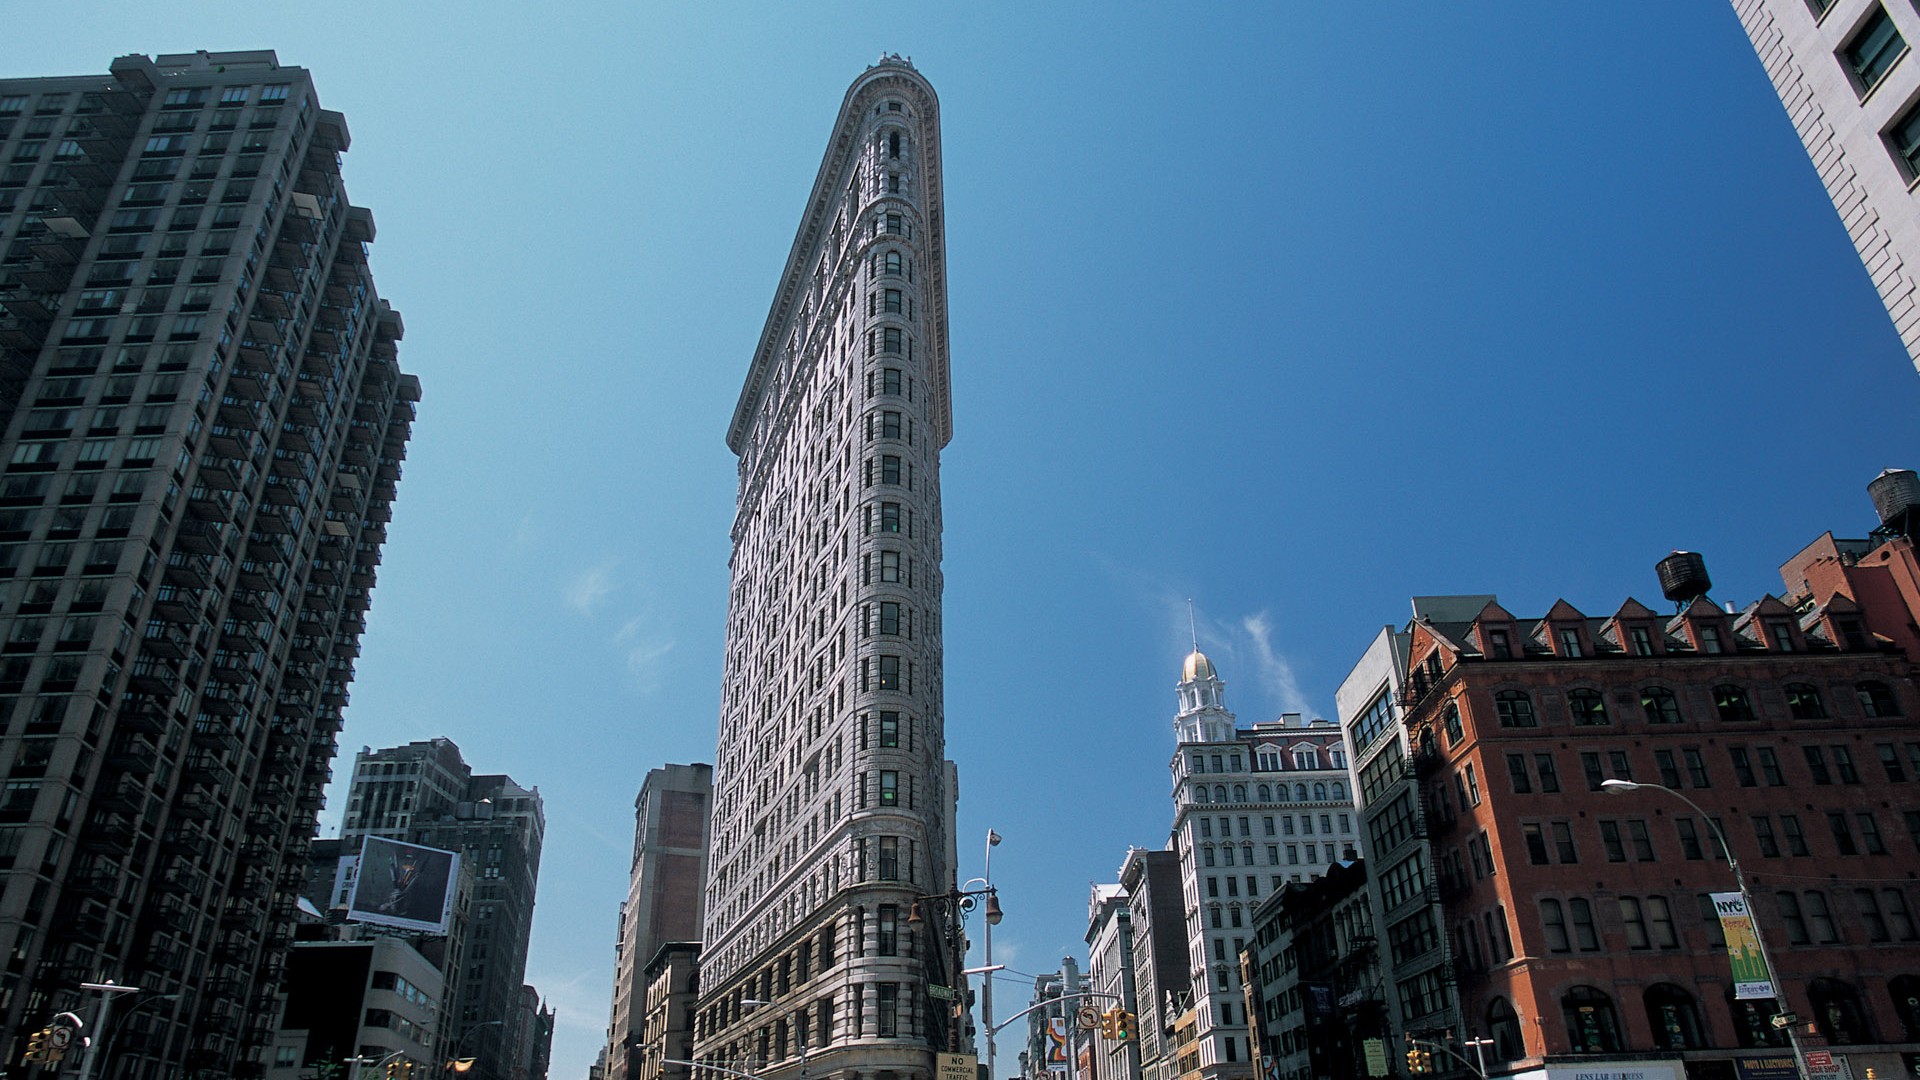 Quirligen Stadt New York Building #8 - 1920x1080